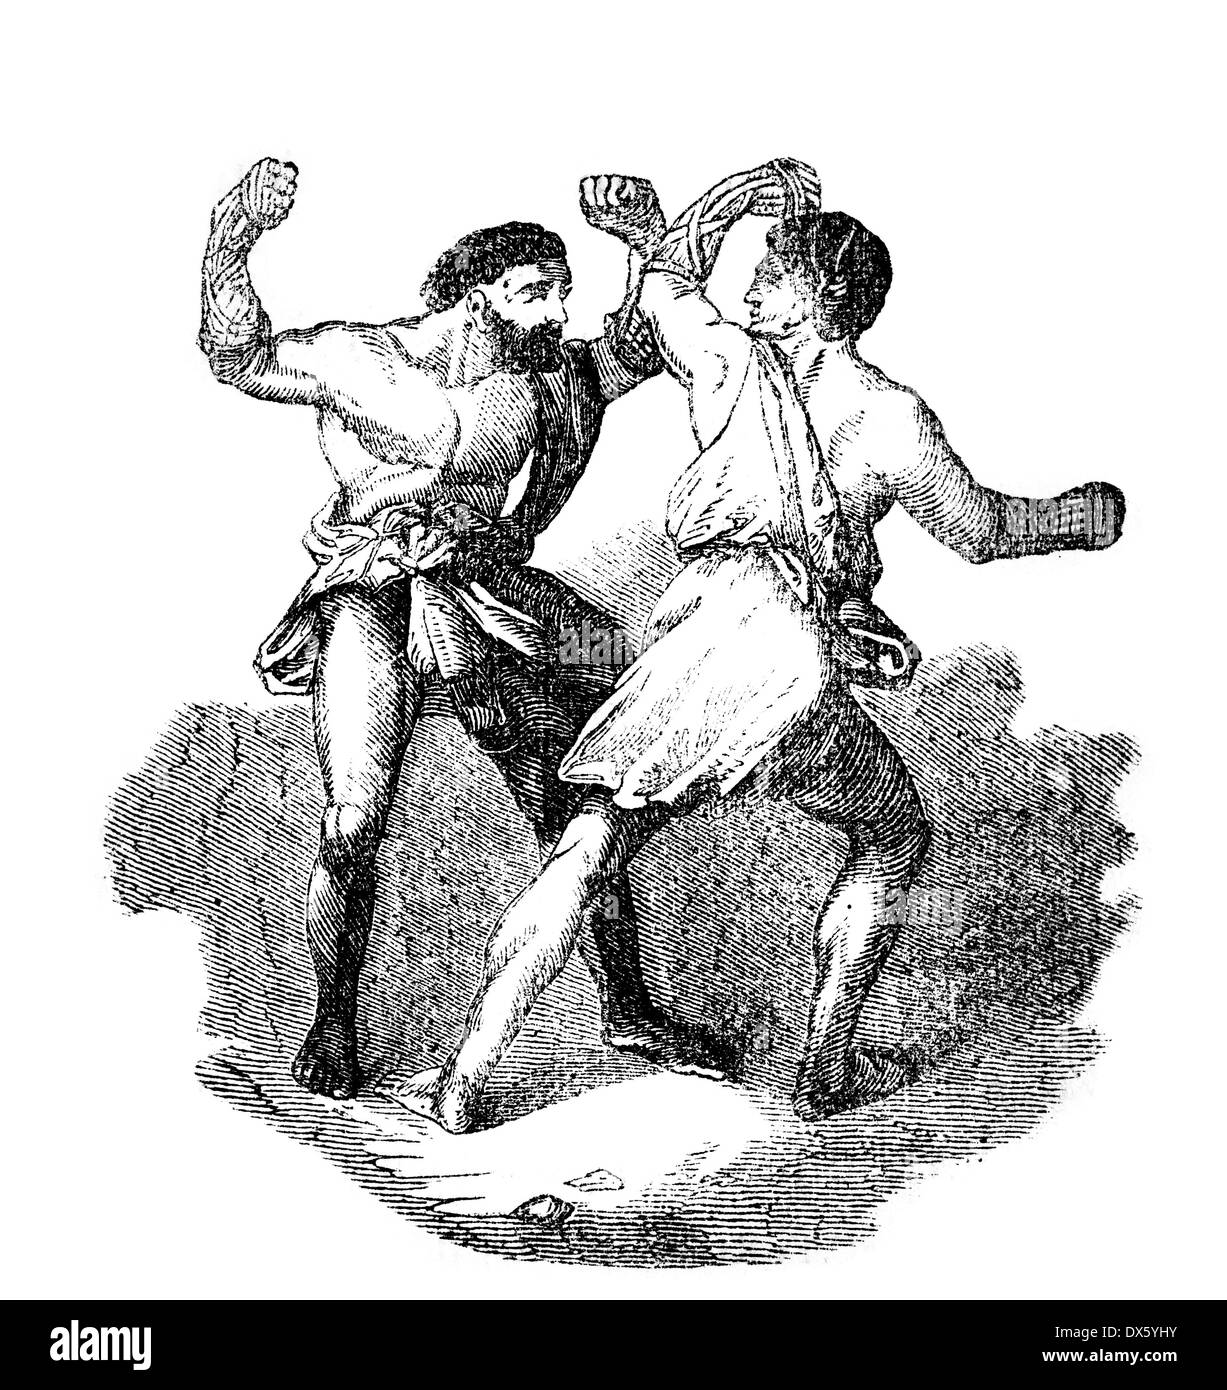 Kämpfer, Illustration aus Buch datiert 1878 Stockfoto